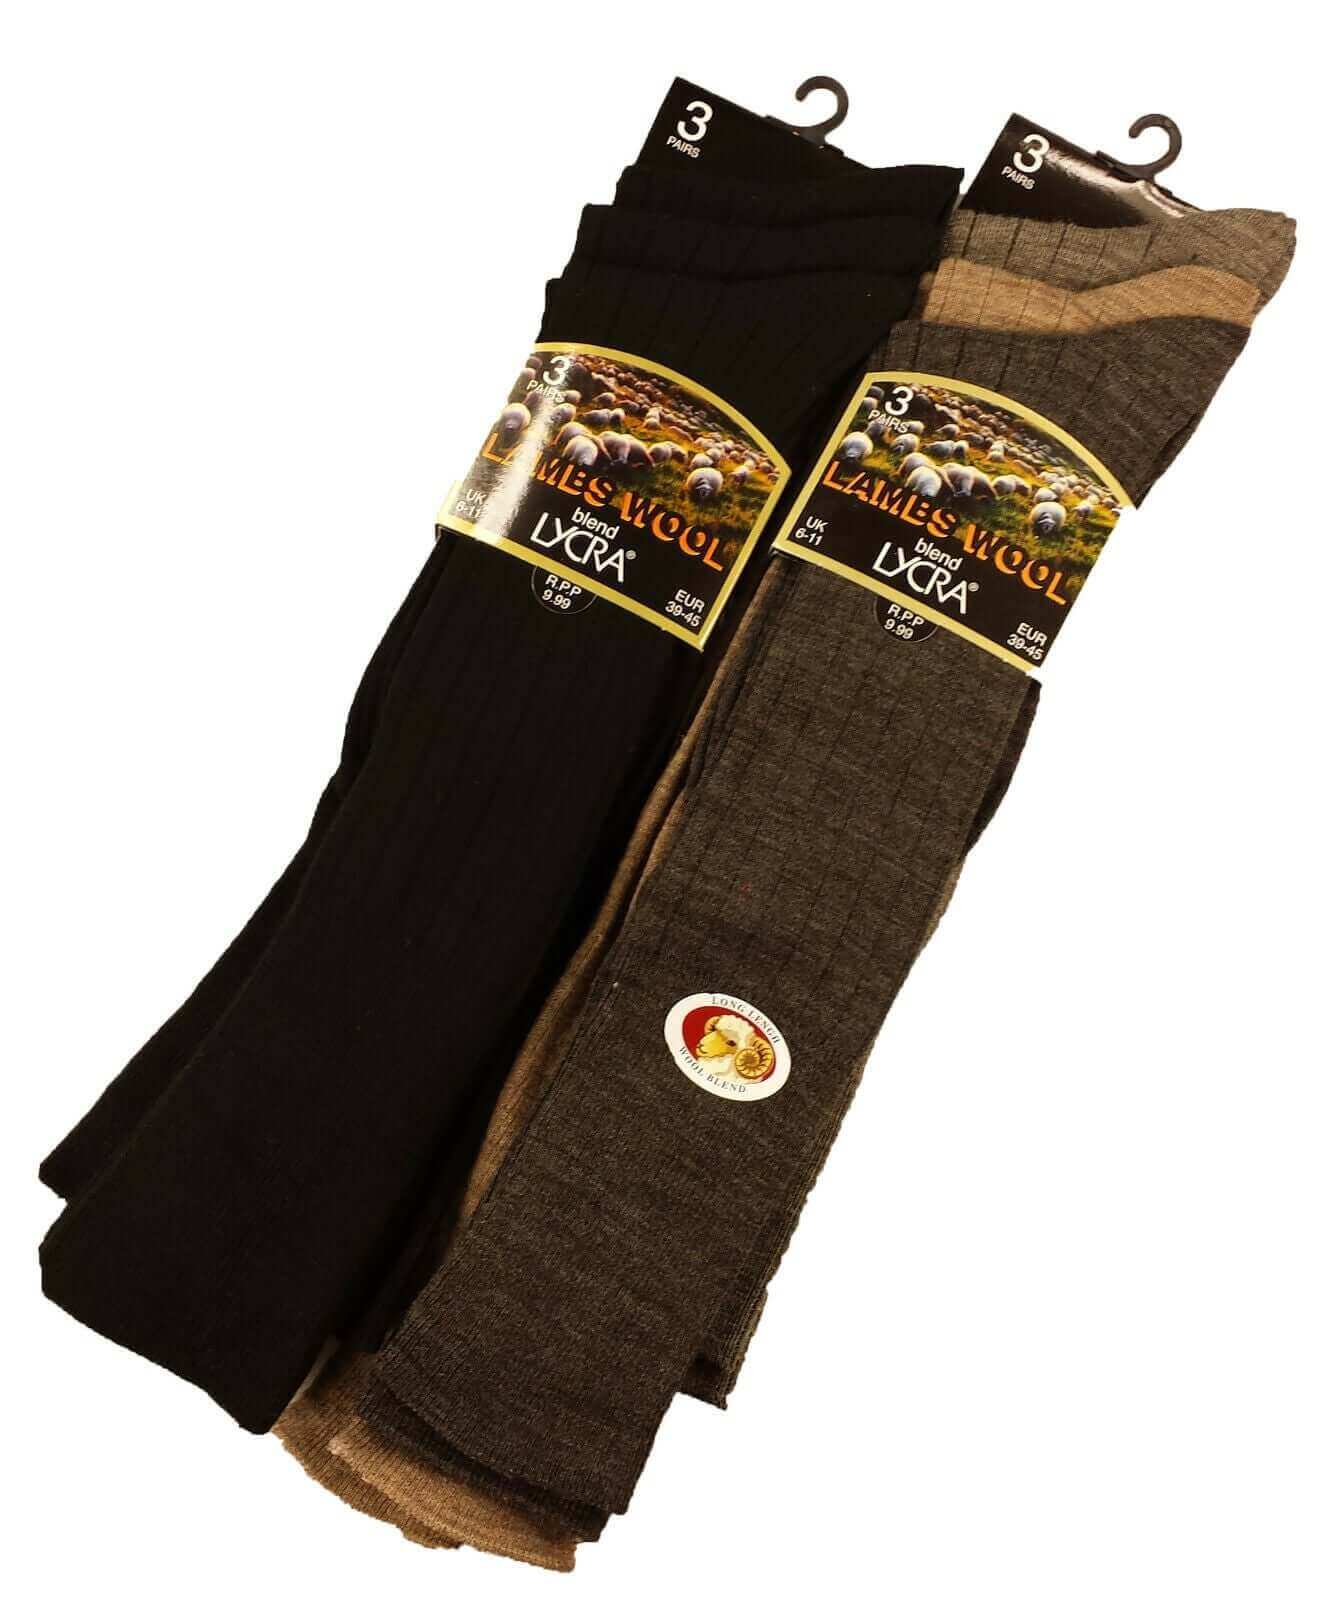 6 Pairs Men's Long Wool Socks, Knee High Fine Wool Socks. Buy now for £8.00. A Socks by Sock Stack. 6-11, assorted, boot, boys, breathable, clothing, comfortable, cosy, country, hiking, Lambs wool, long socks, mens, mens socks, socks, soft, wellington, wo